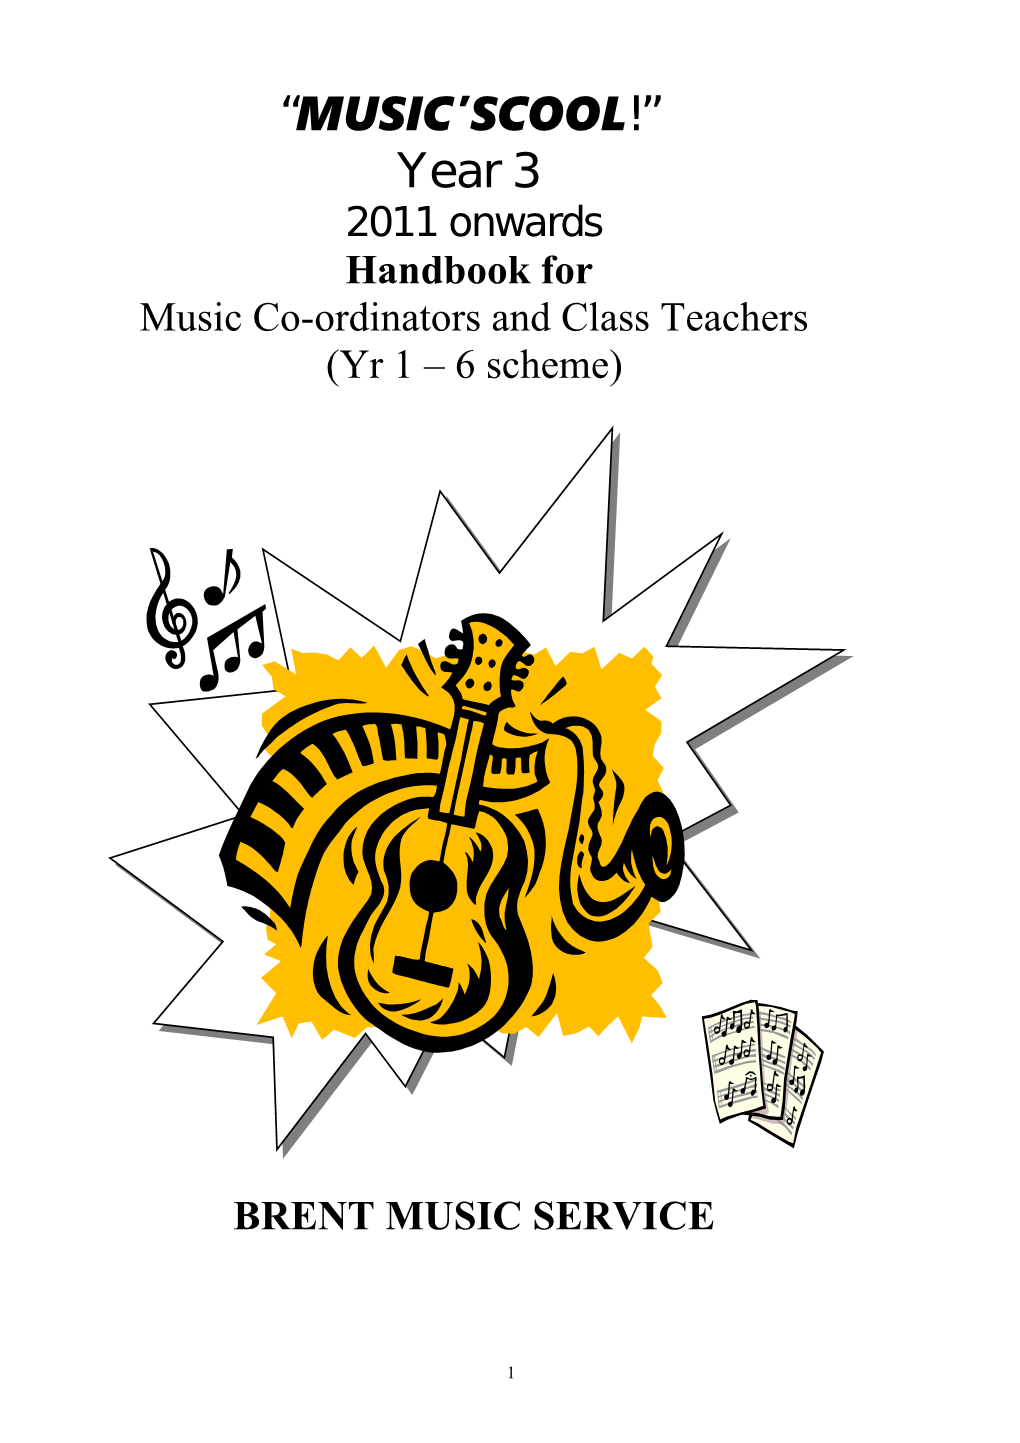 Brent Music Service